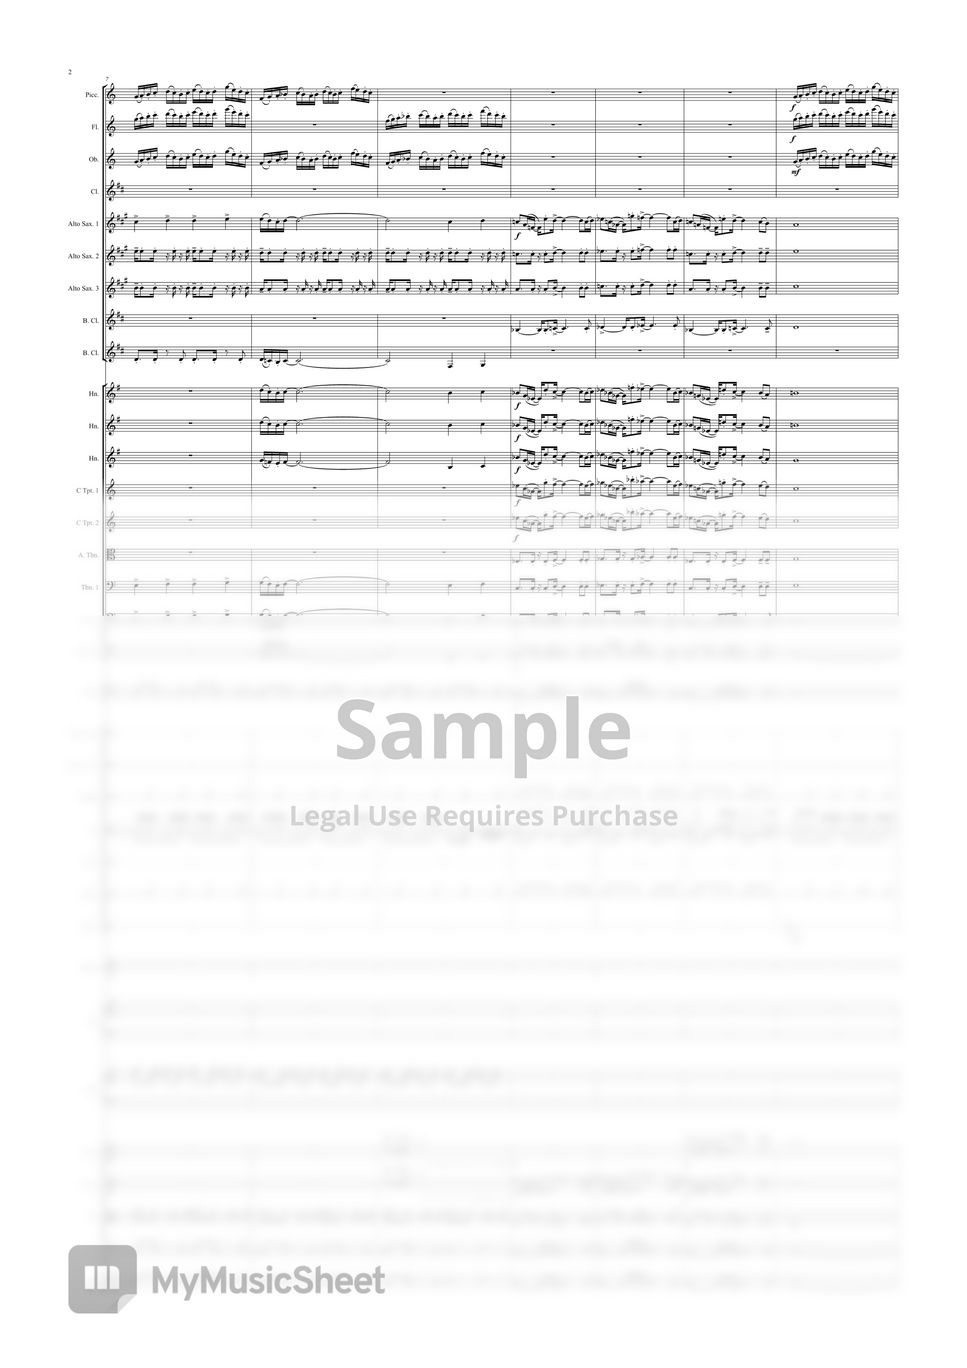 Kingdom Hearts III - Yoko Shimomura - Toy Box Jam (Full Score) by Brandon Skelton